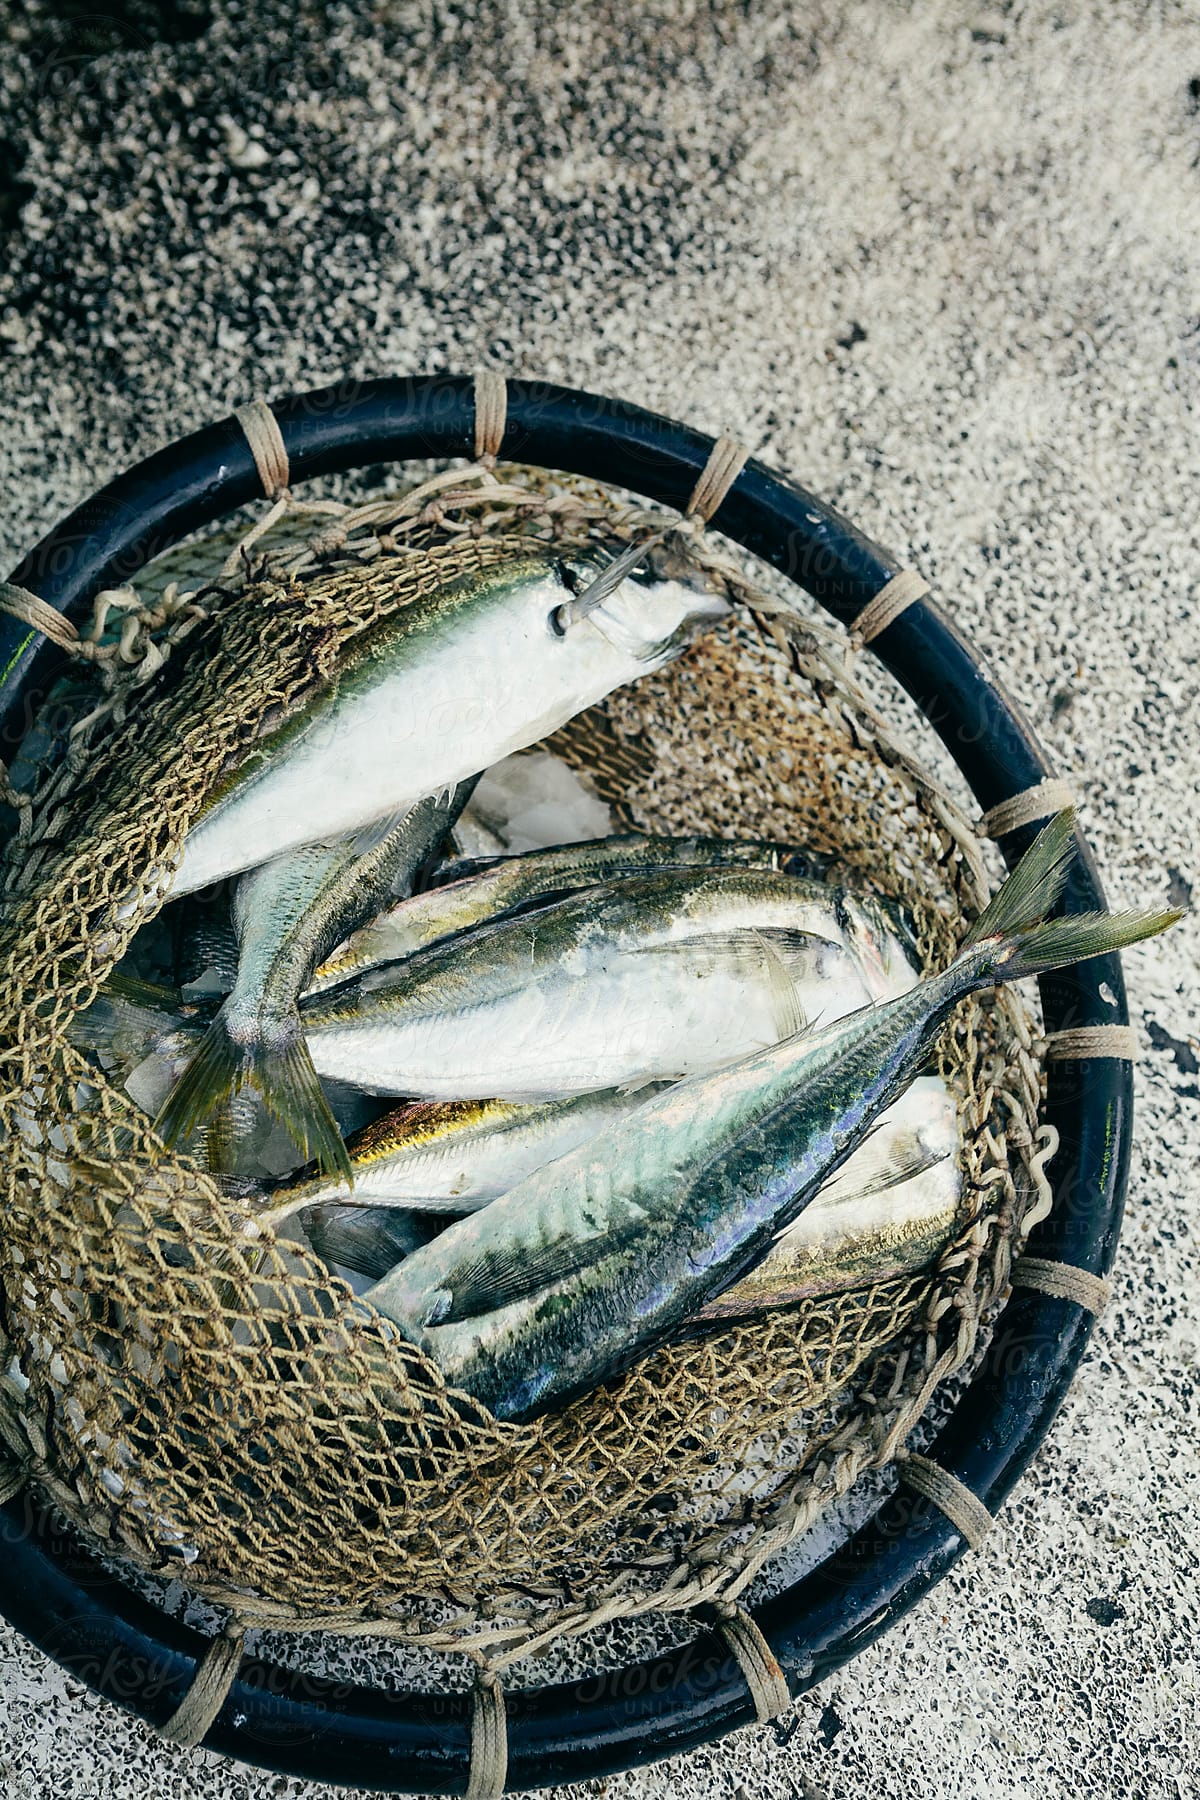 Freshly caught mackerel in a fishing net